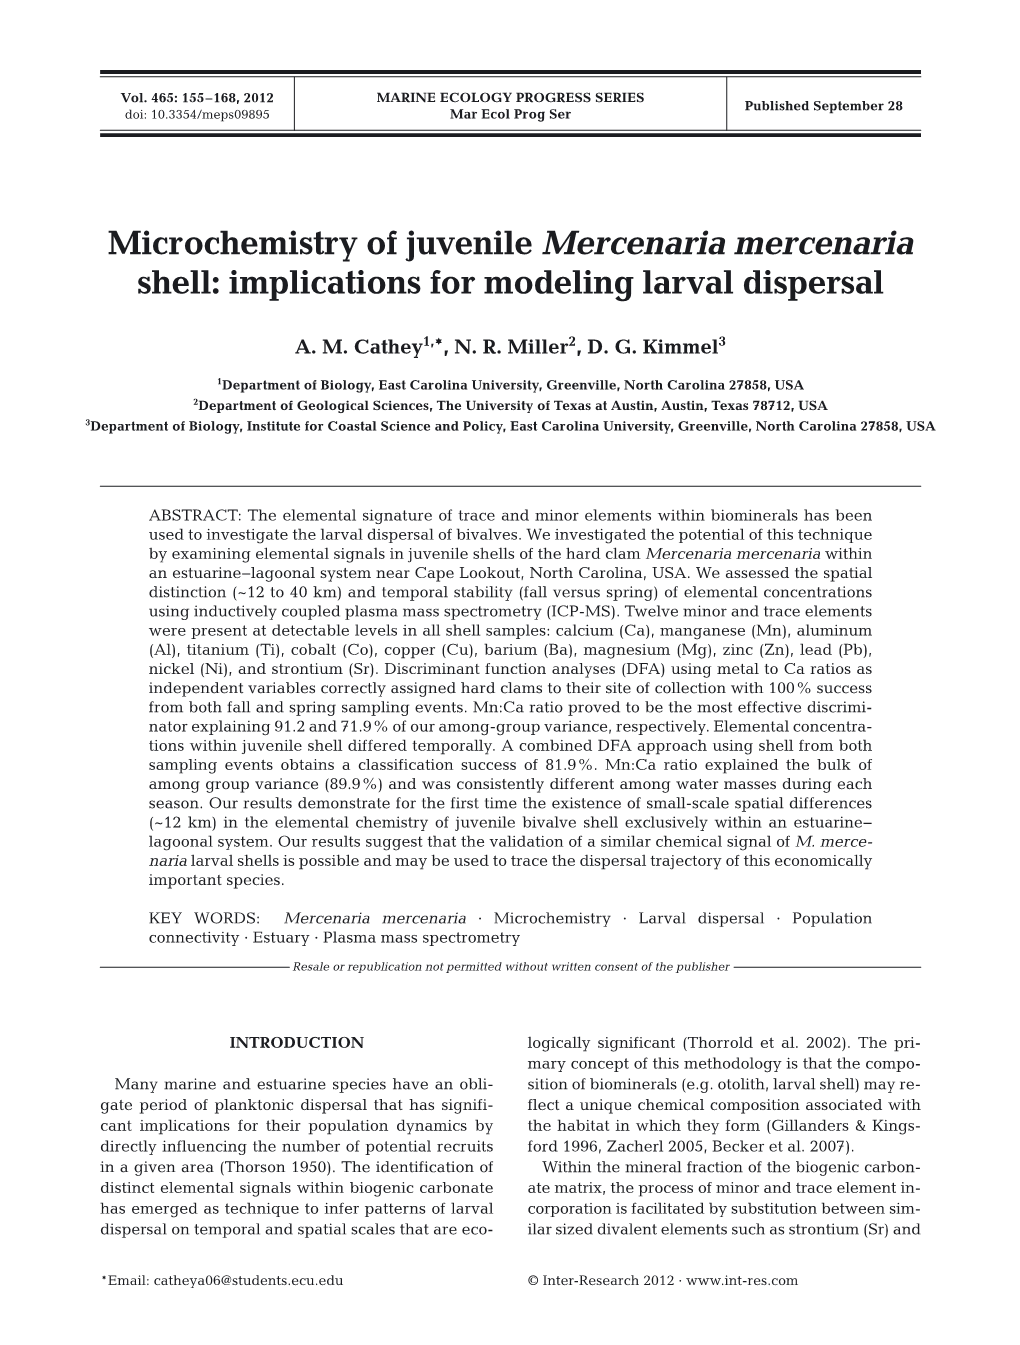 Microchemistry of Juvenile Mercenaria Mercenaria Shell: Implications for Modeling Larval Dispersal